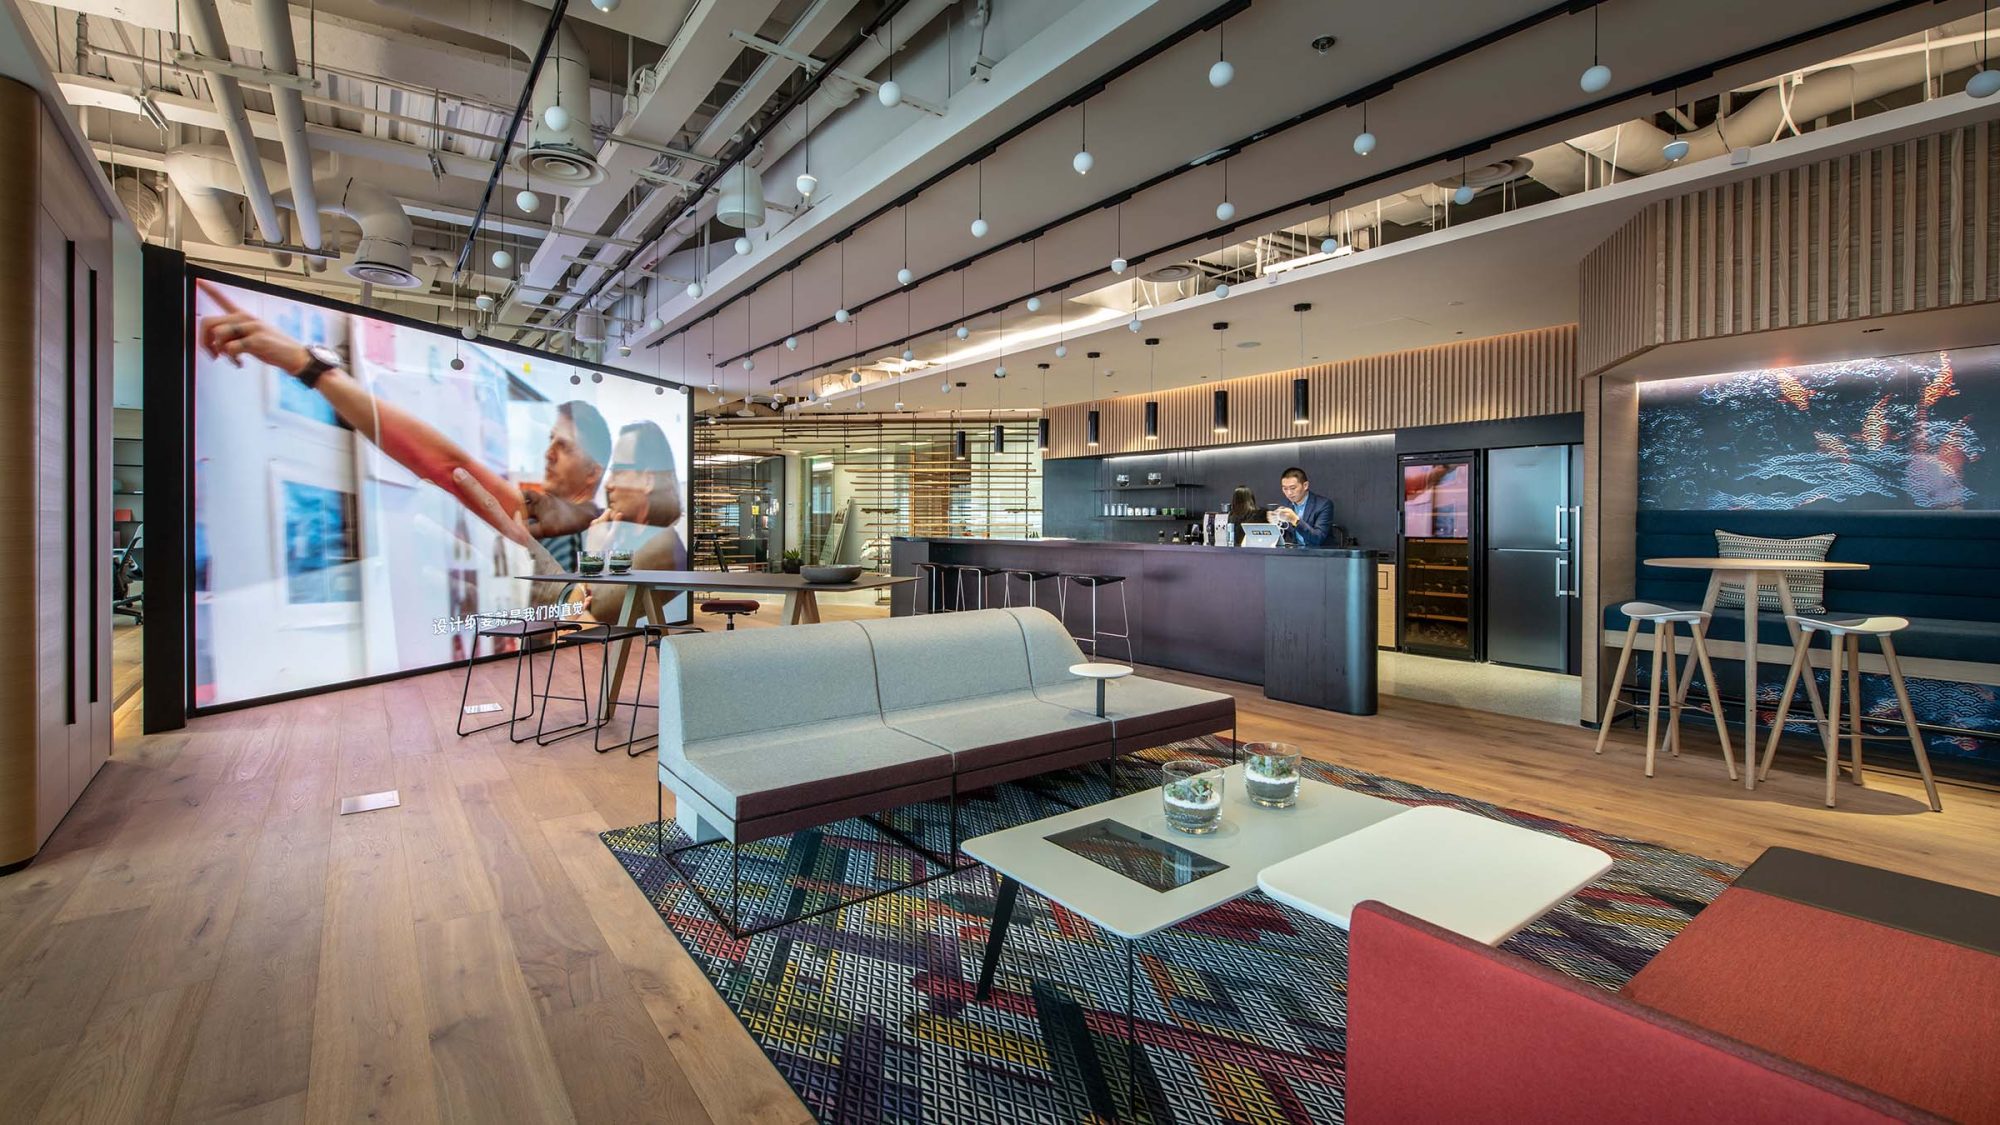 Steelcase headquarter design in Shanghai by M Moser Associates featuring interior design of corporate lounge area.